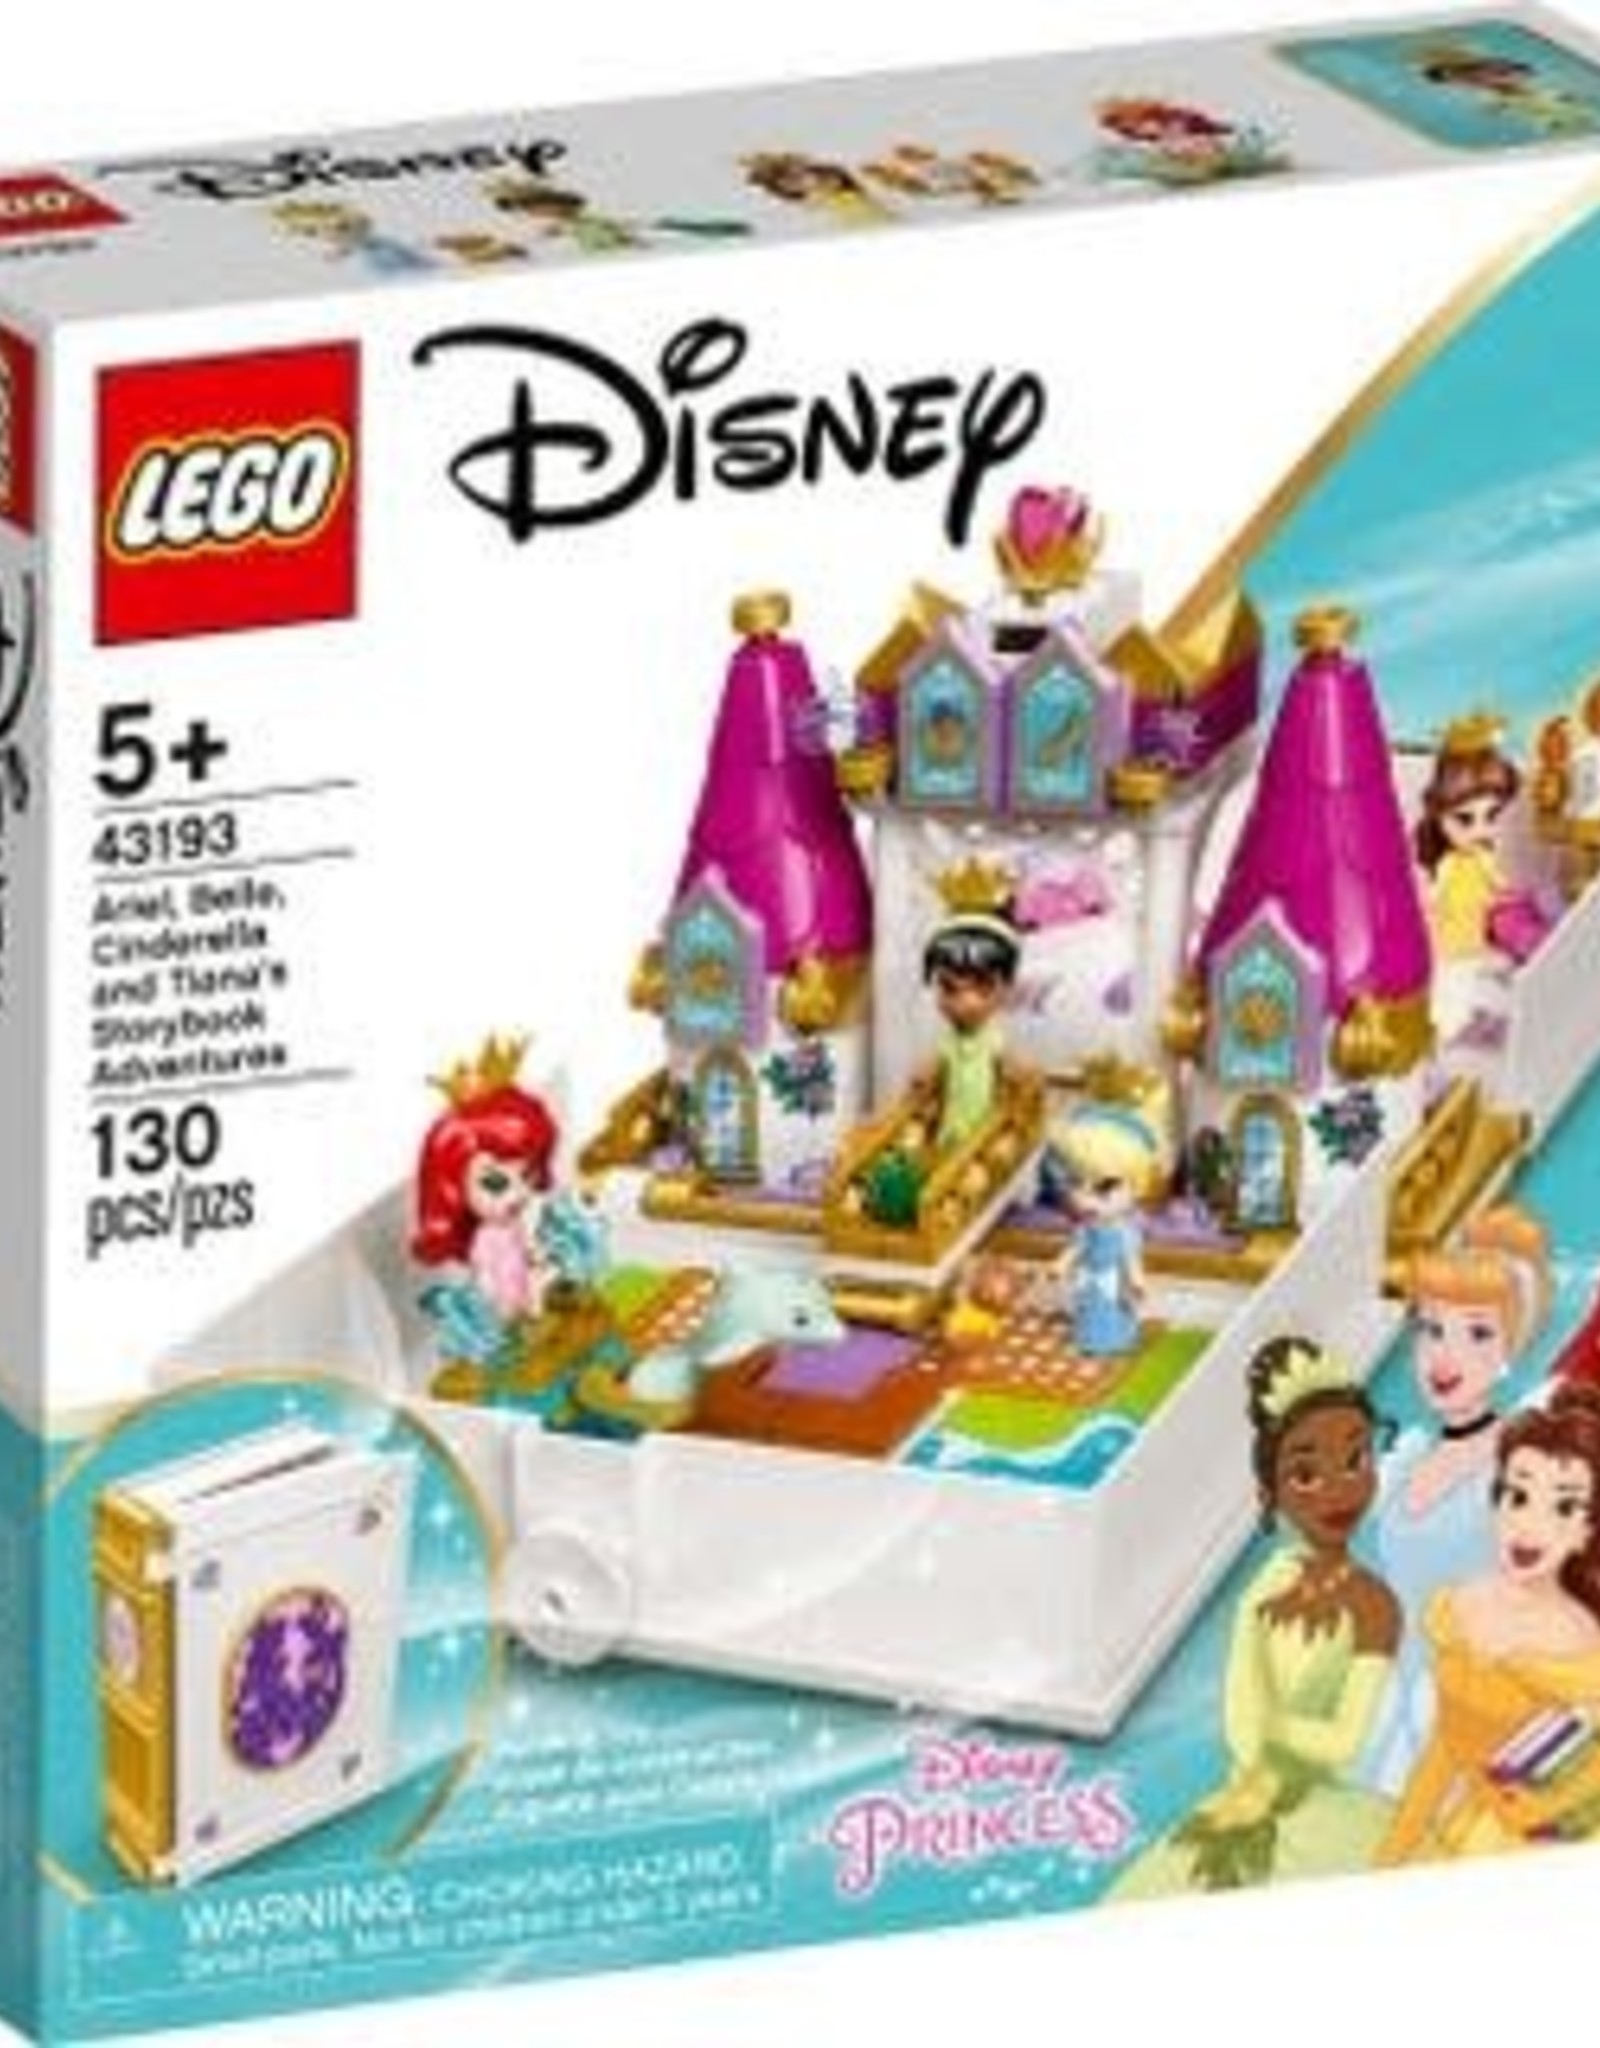 LEGO Classic Lego Disney Princess Ariel, Belle, Cinderella, and Tiana's Story Book